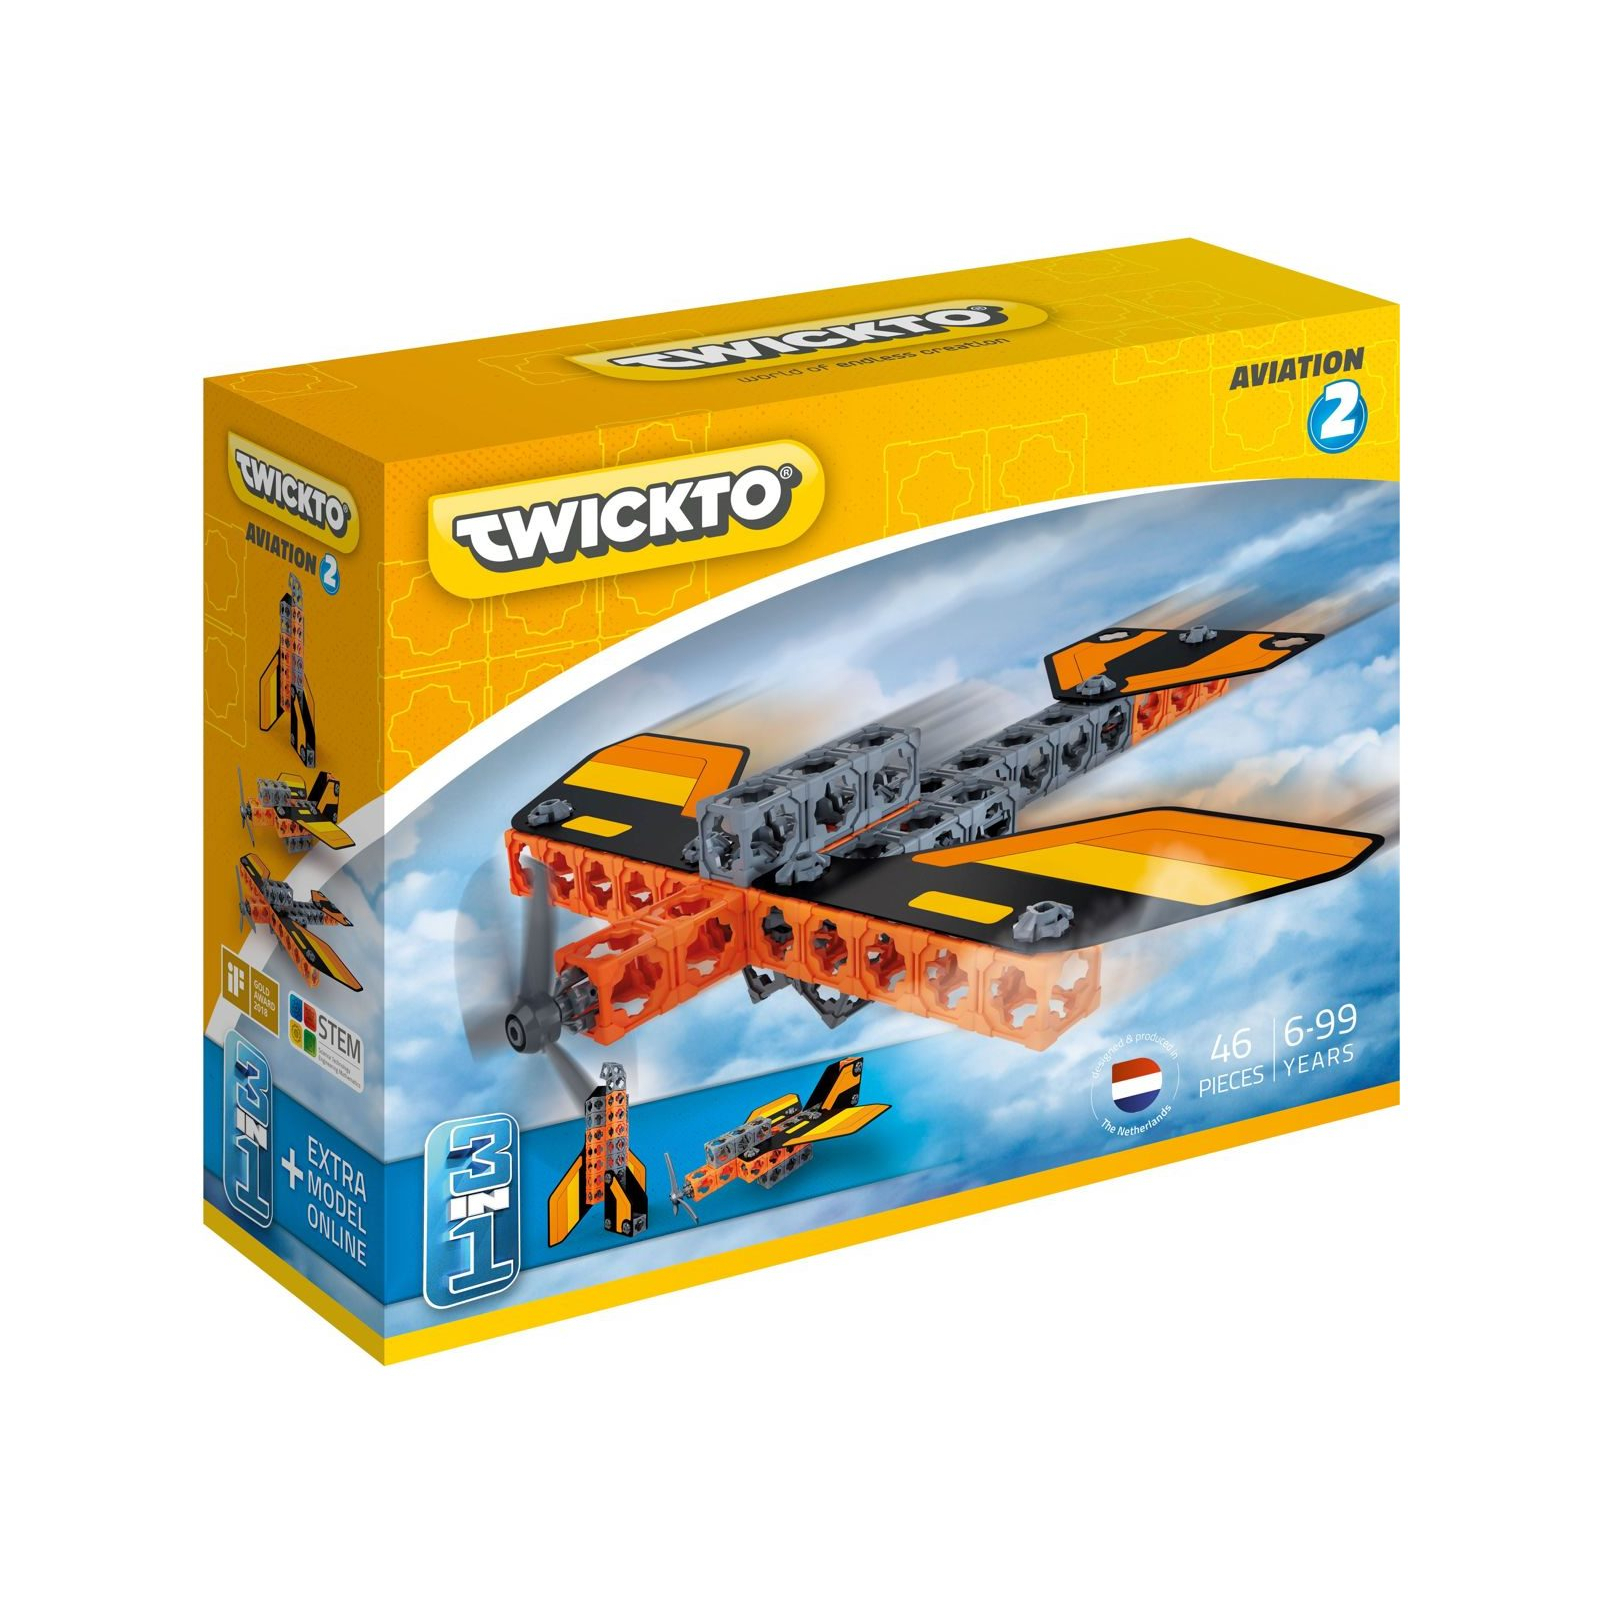 Конструктор Twickto Aviation #2 46 деталей (15073821)